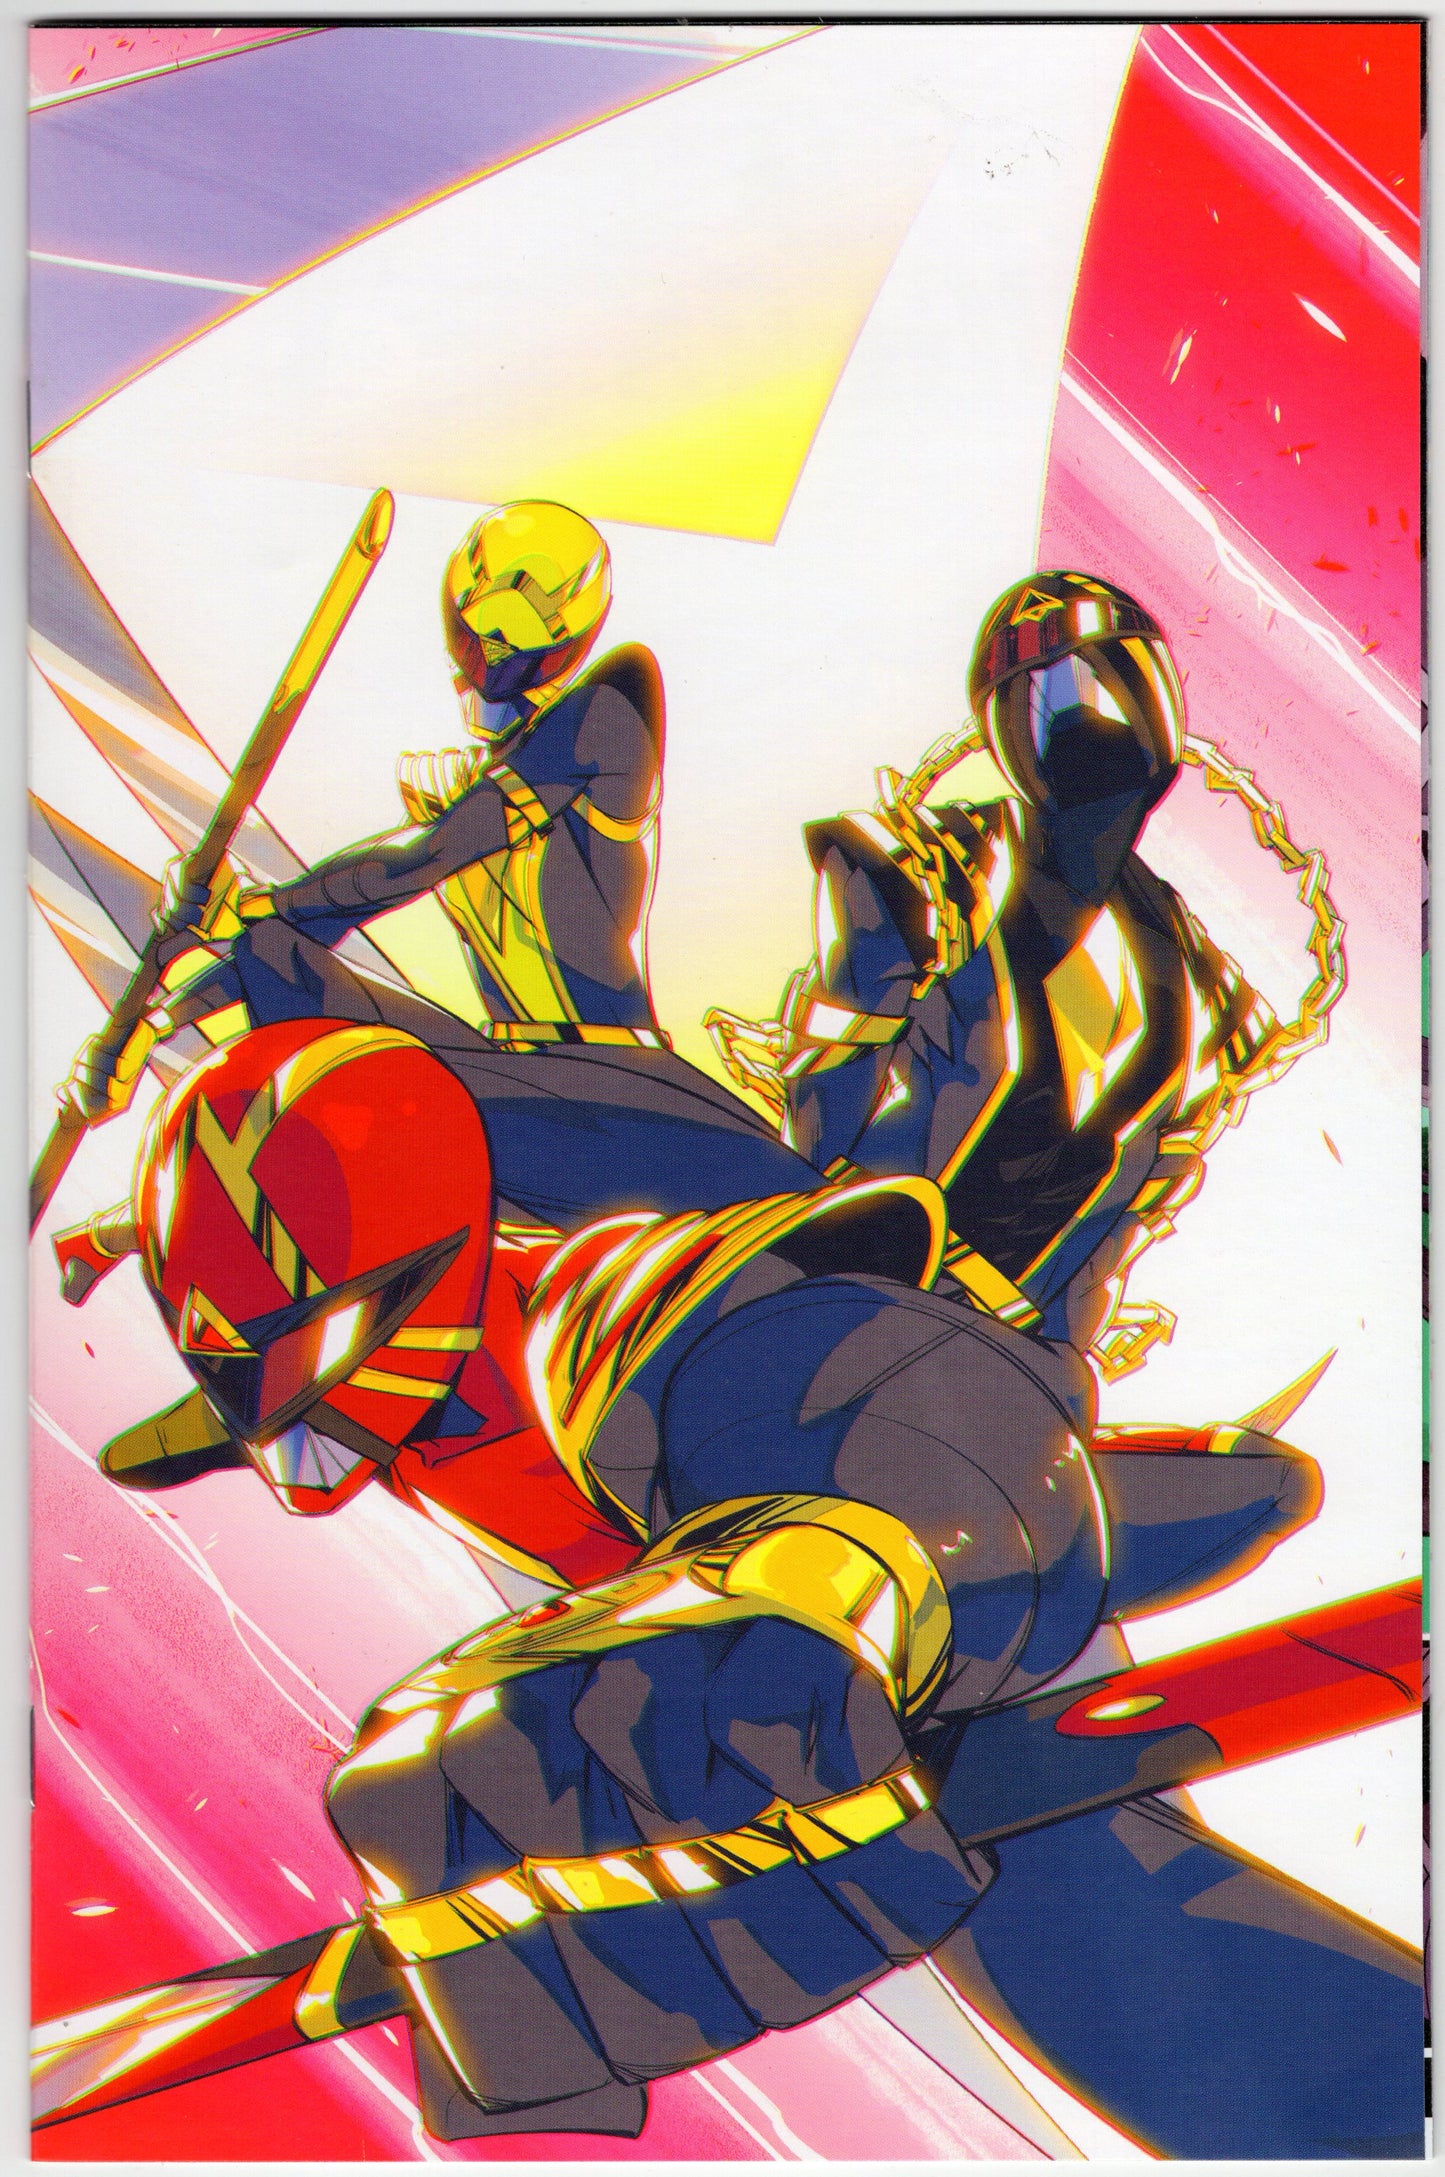 Power Rangers - Issue #1 "Daniel Nicuolo - 1:50 Variant" (Nov. 2020 - Boom! Studios) NM